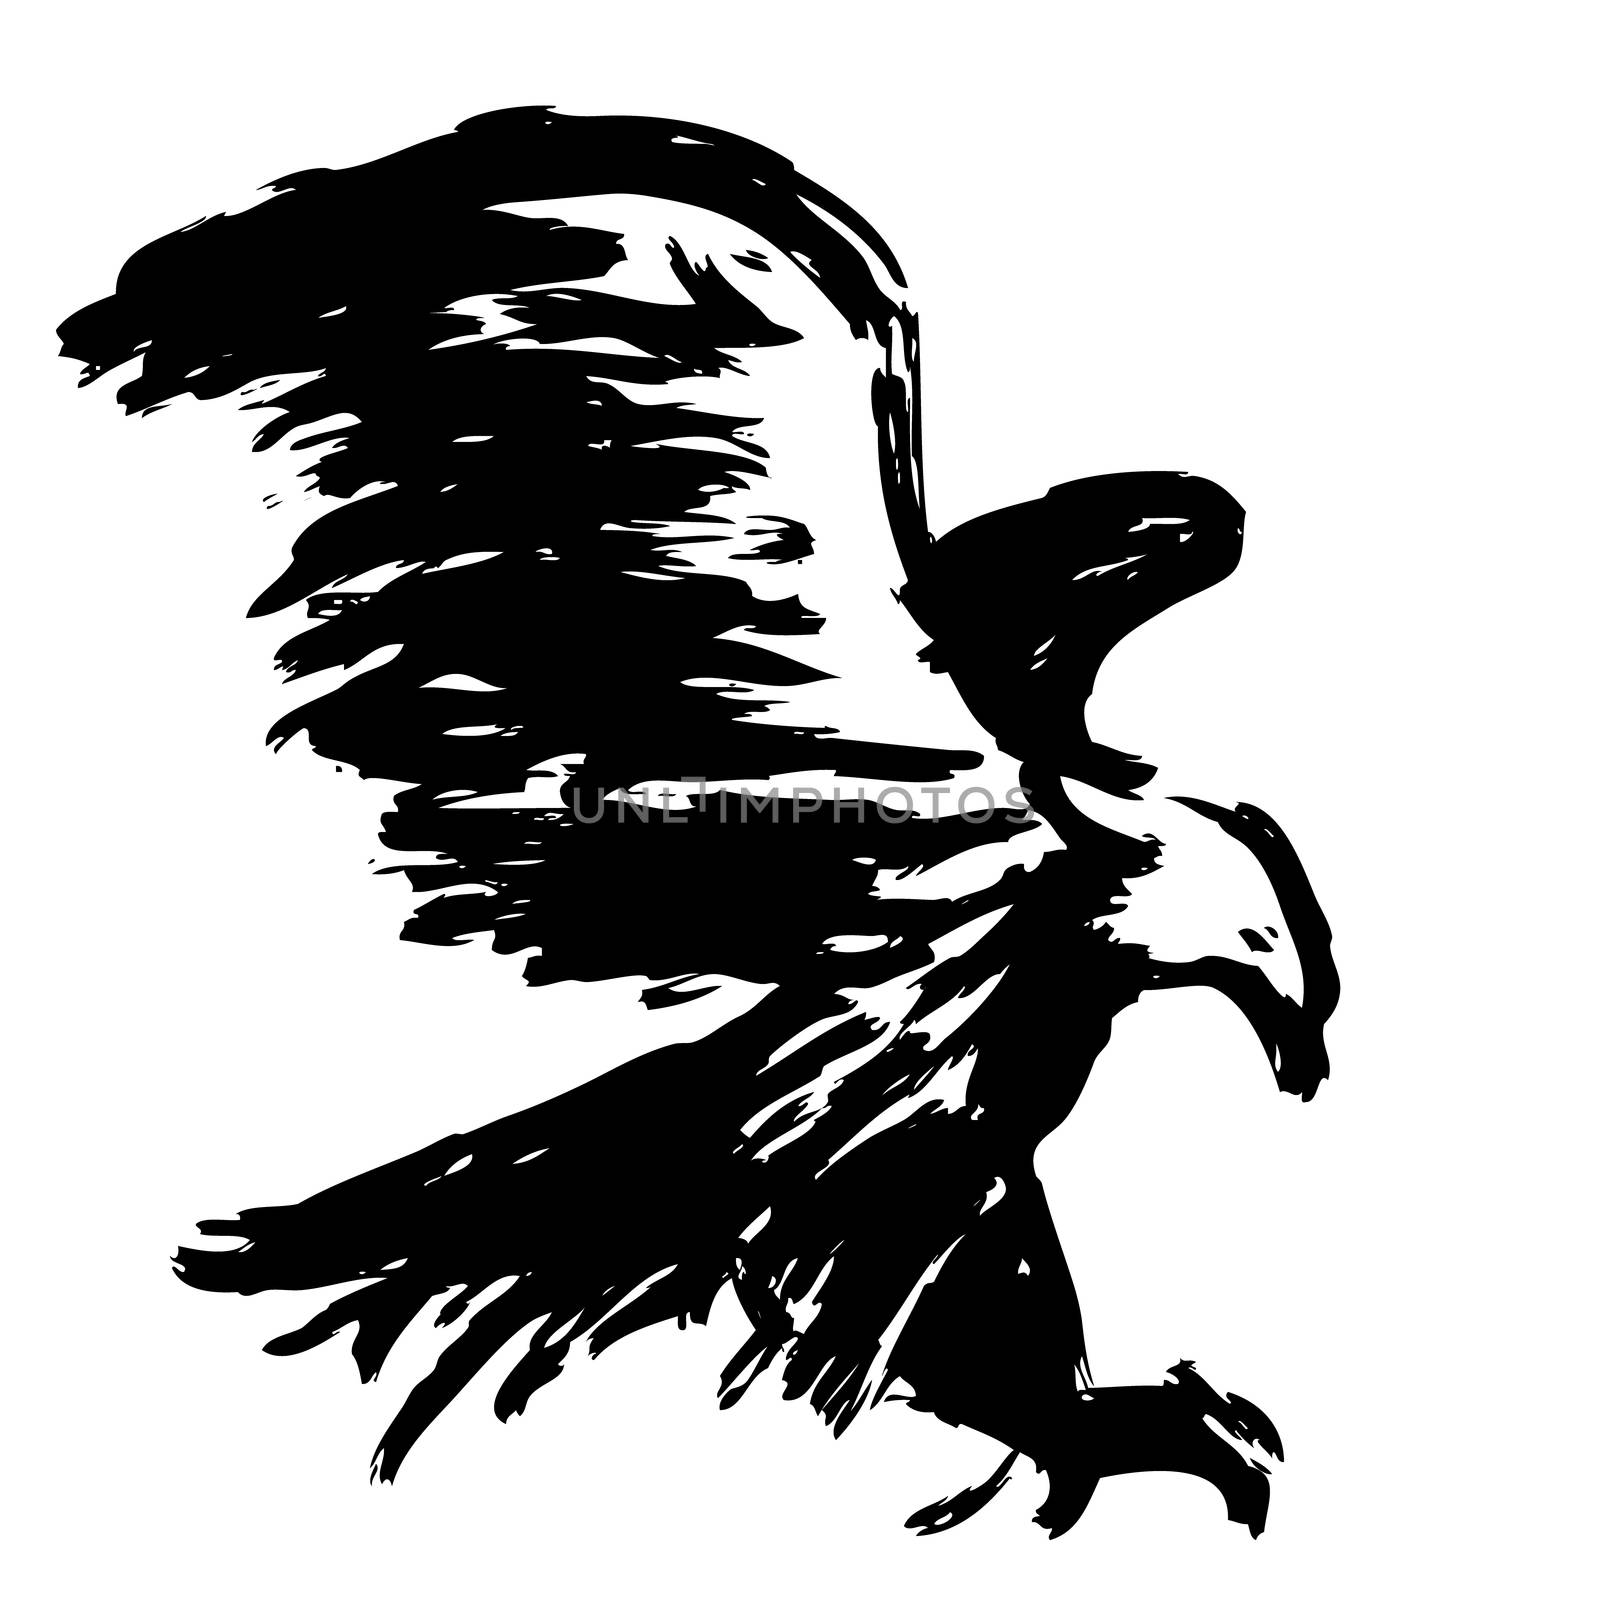 freehand sketch illustration of eagle, hawk bird by simpleBE